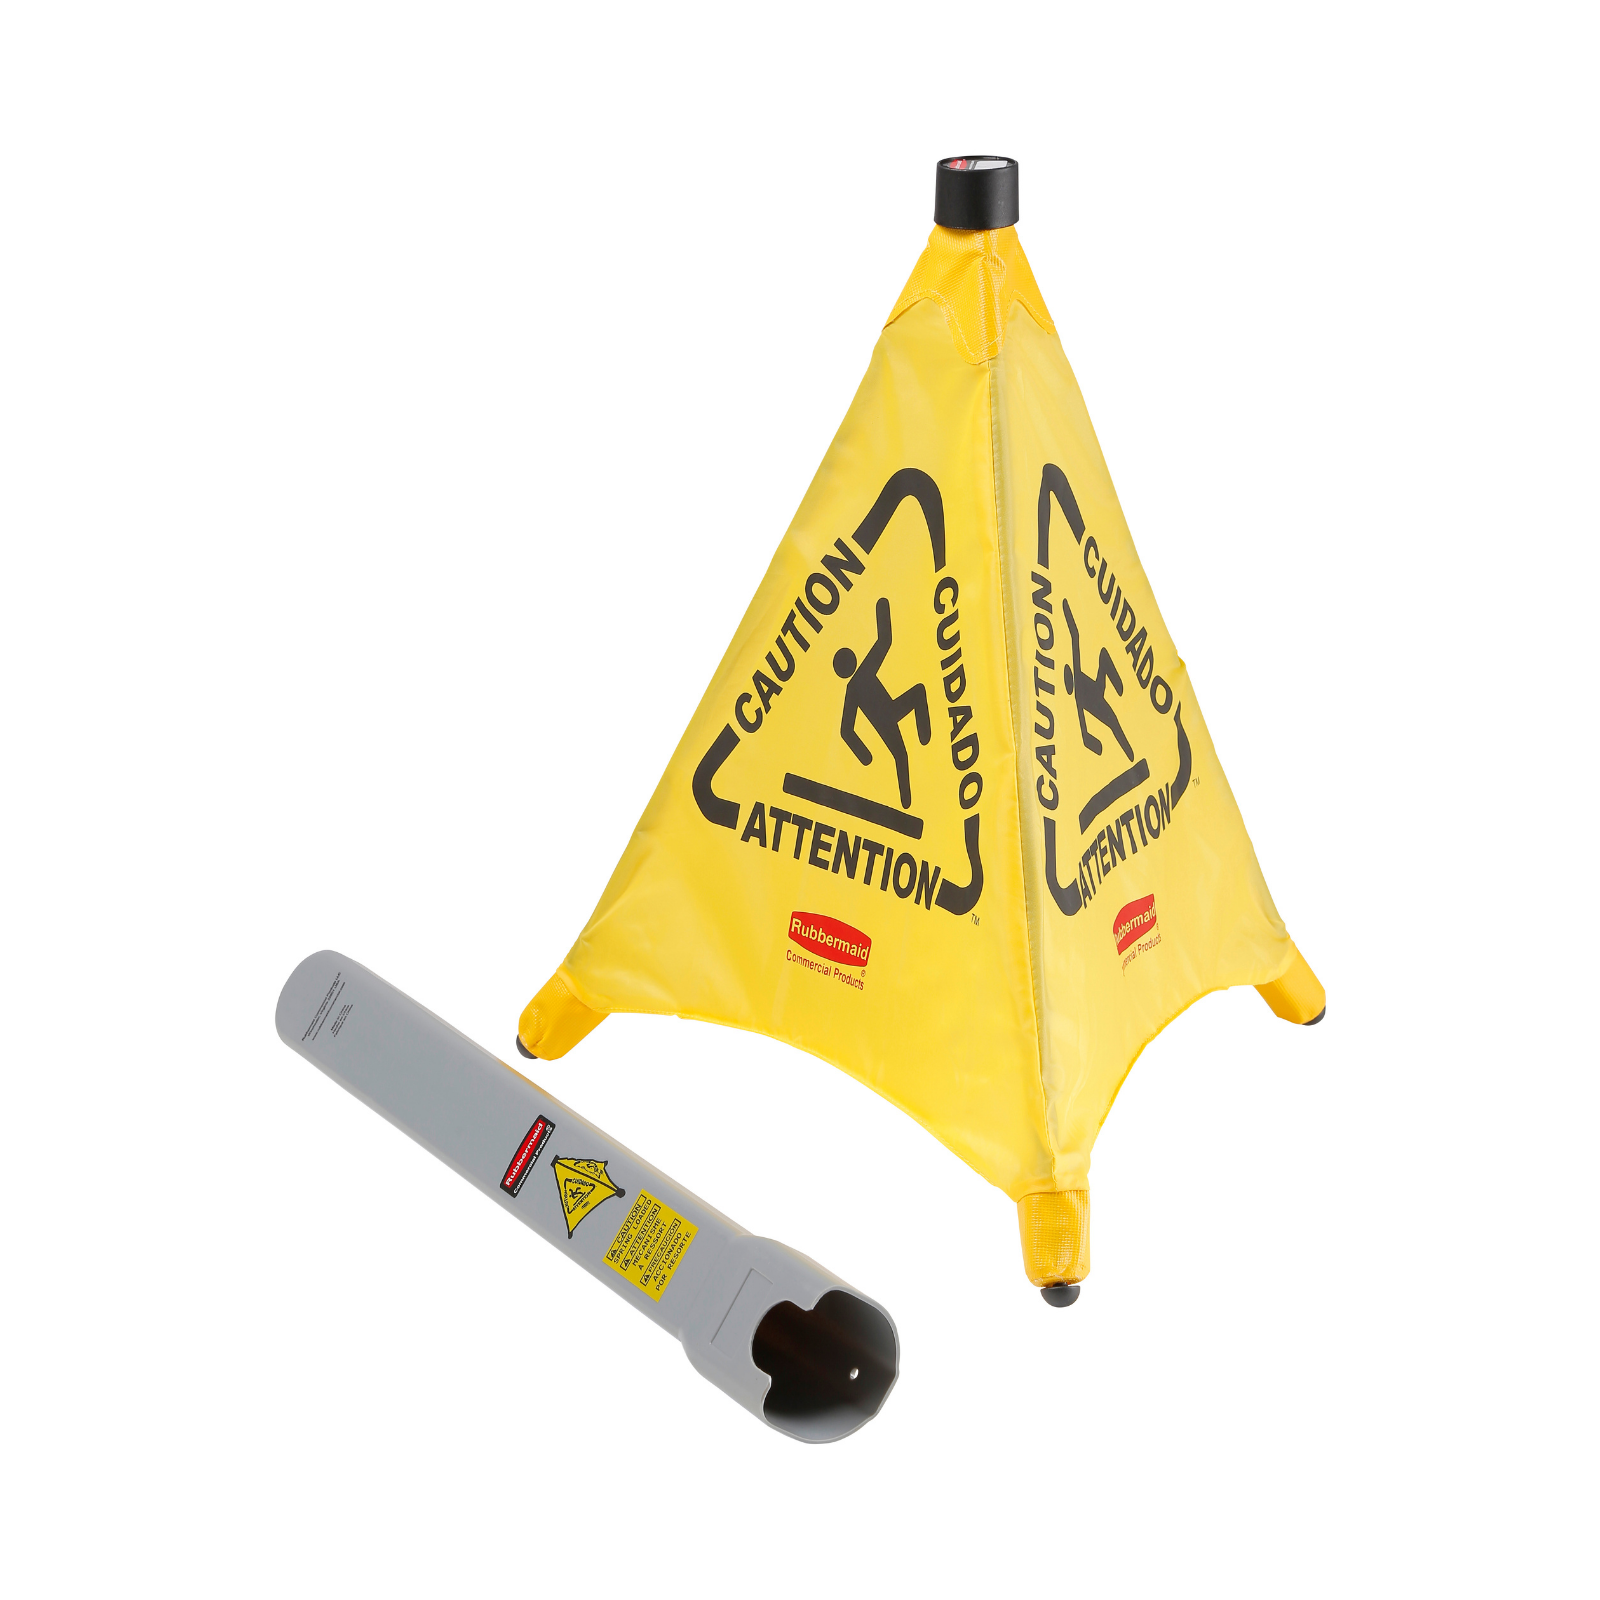 Site Safety Pop-up Cone - 50cm